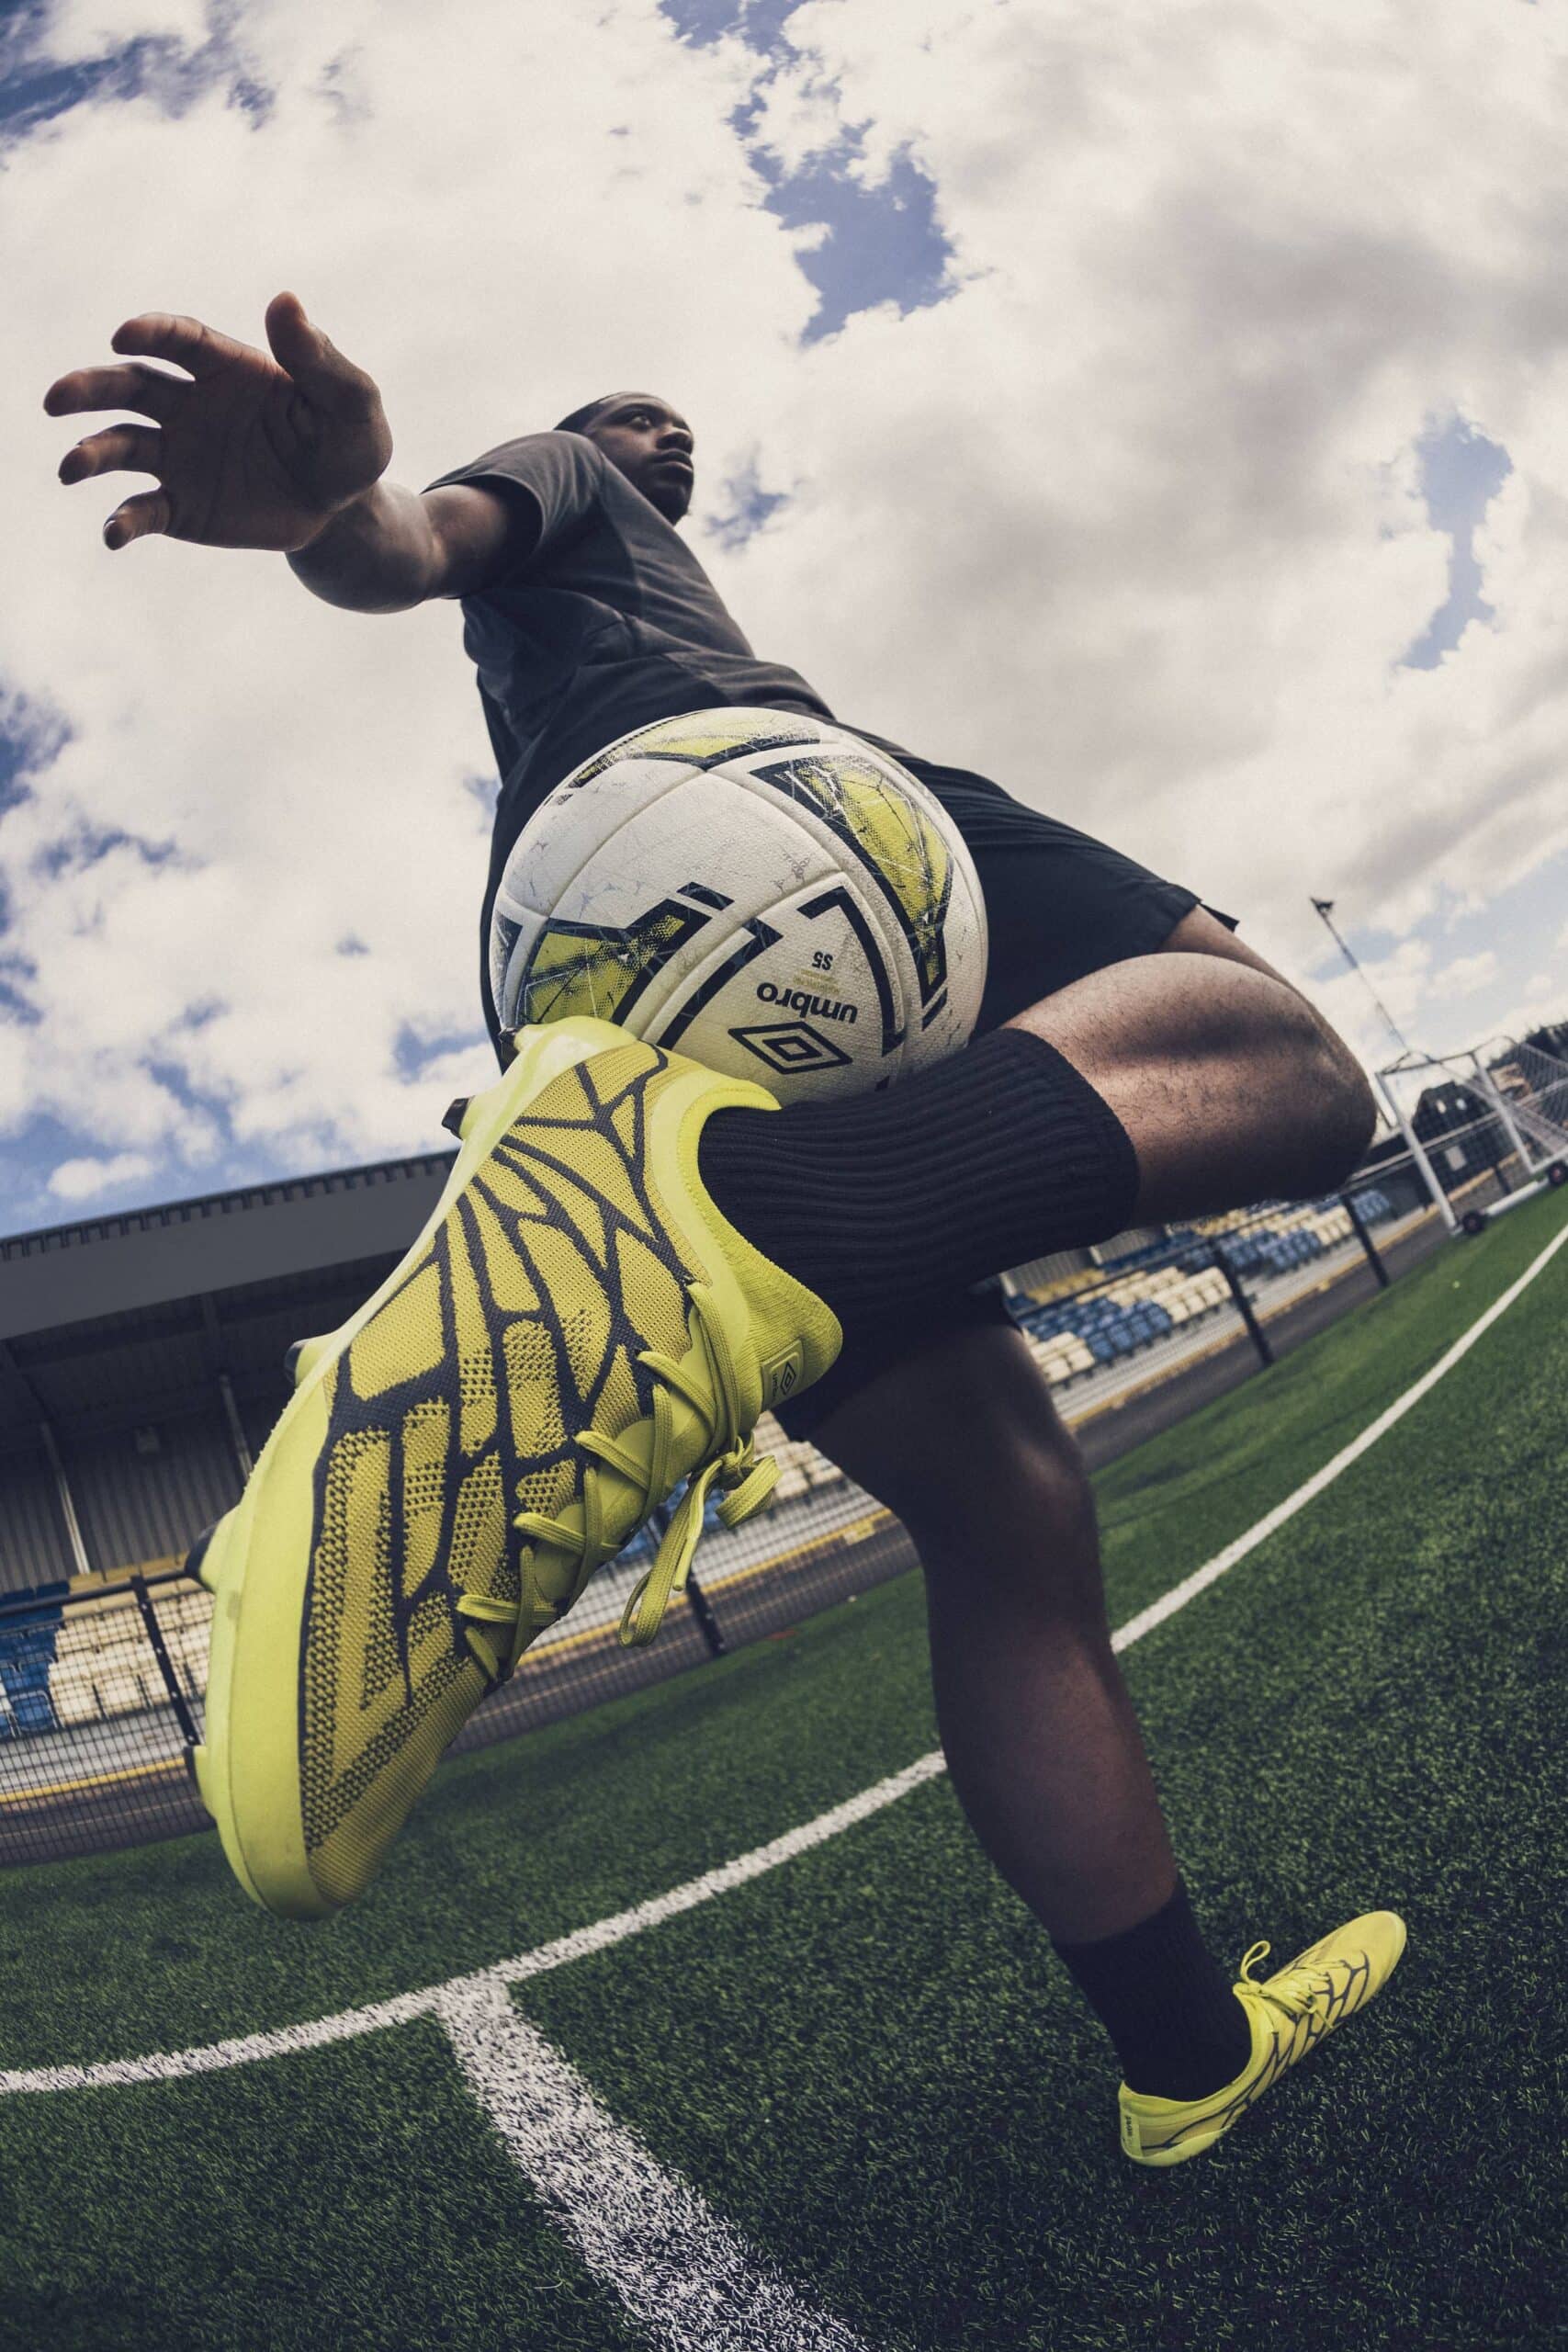 Umbro footballer performing a skill move wearing velocita alchemist football boots